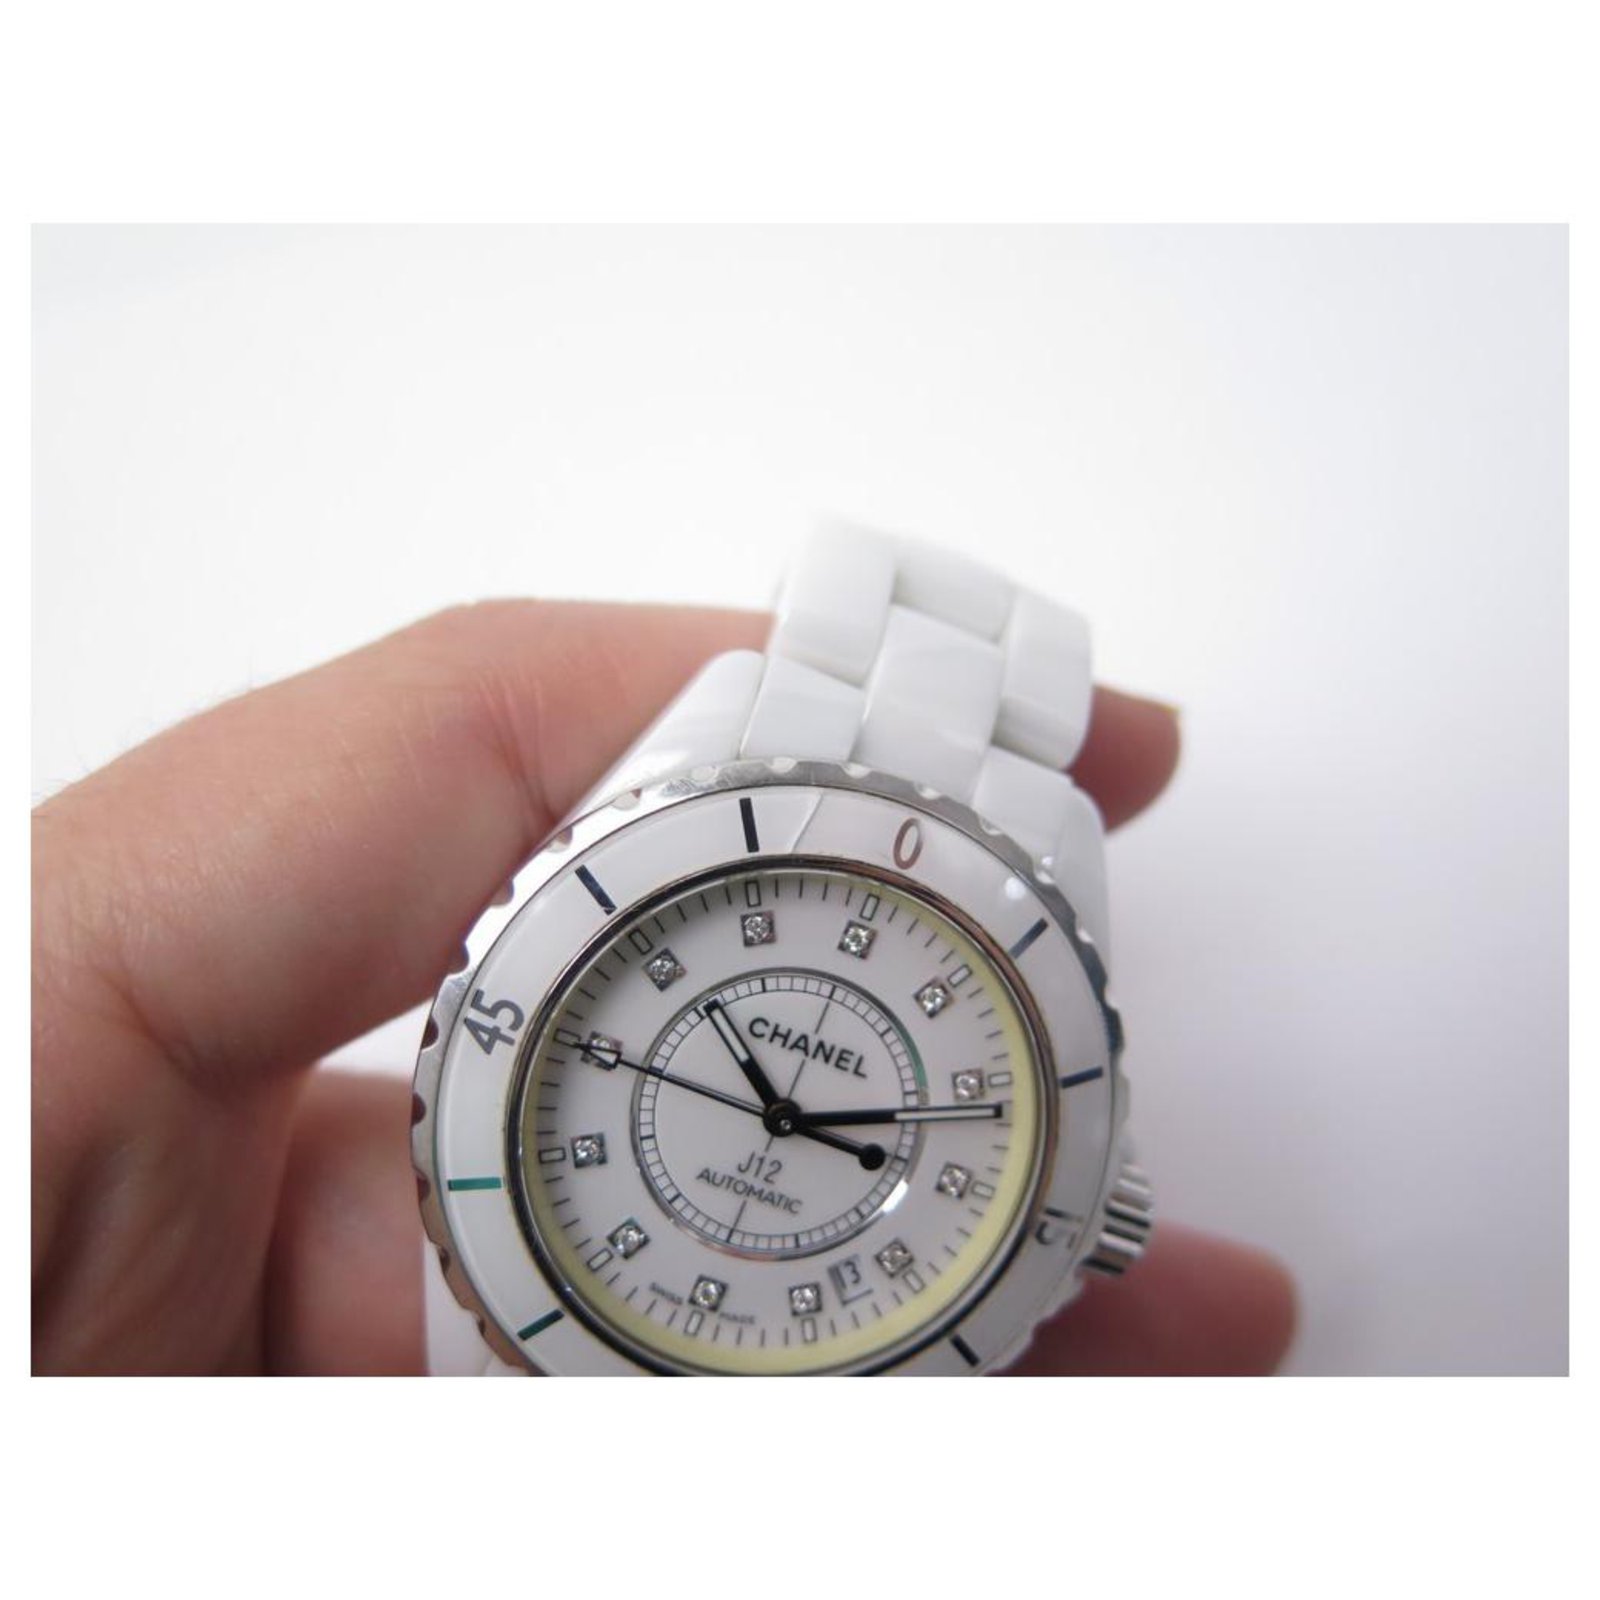 Chanel J watch12 H1629 automatic 38 MM WHITE CERAMIC DIAMONDS WATCH